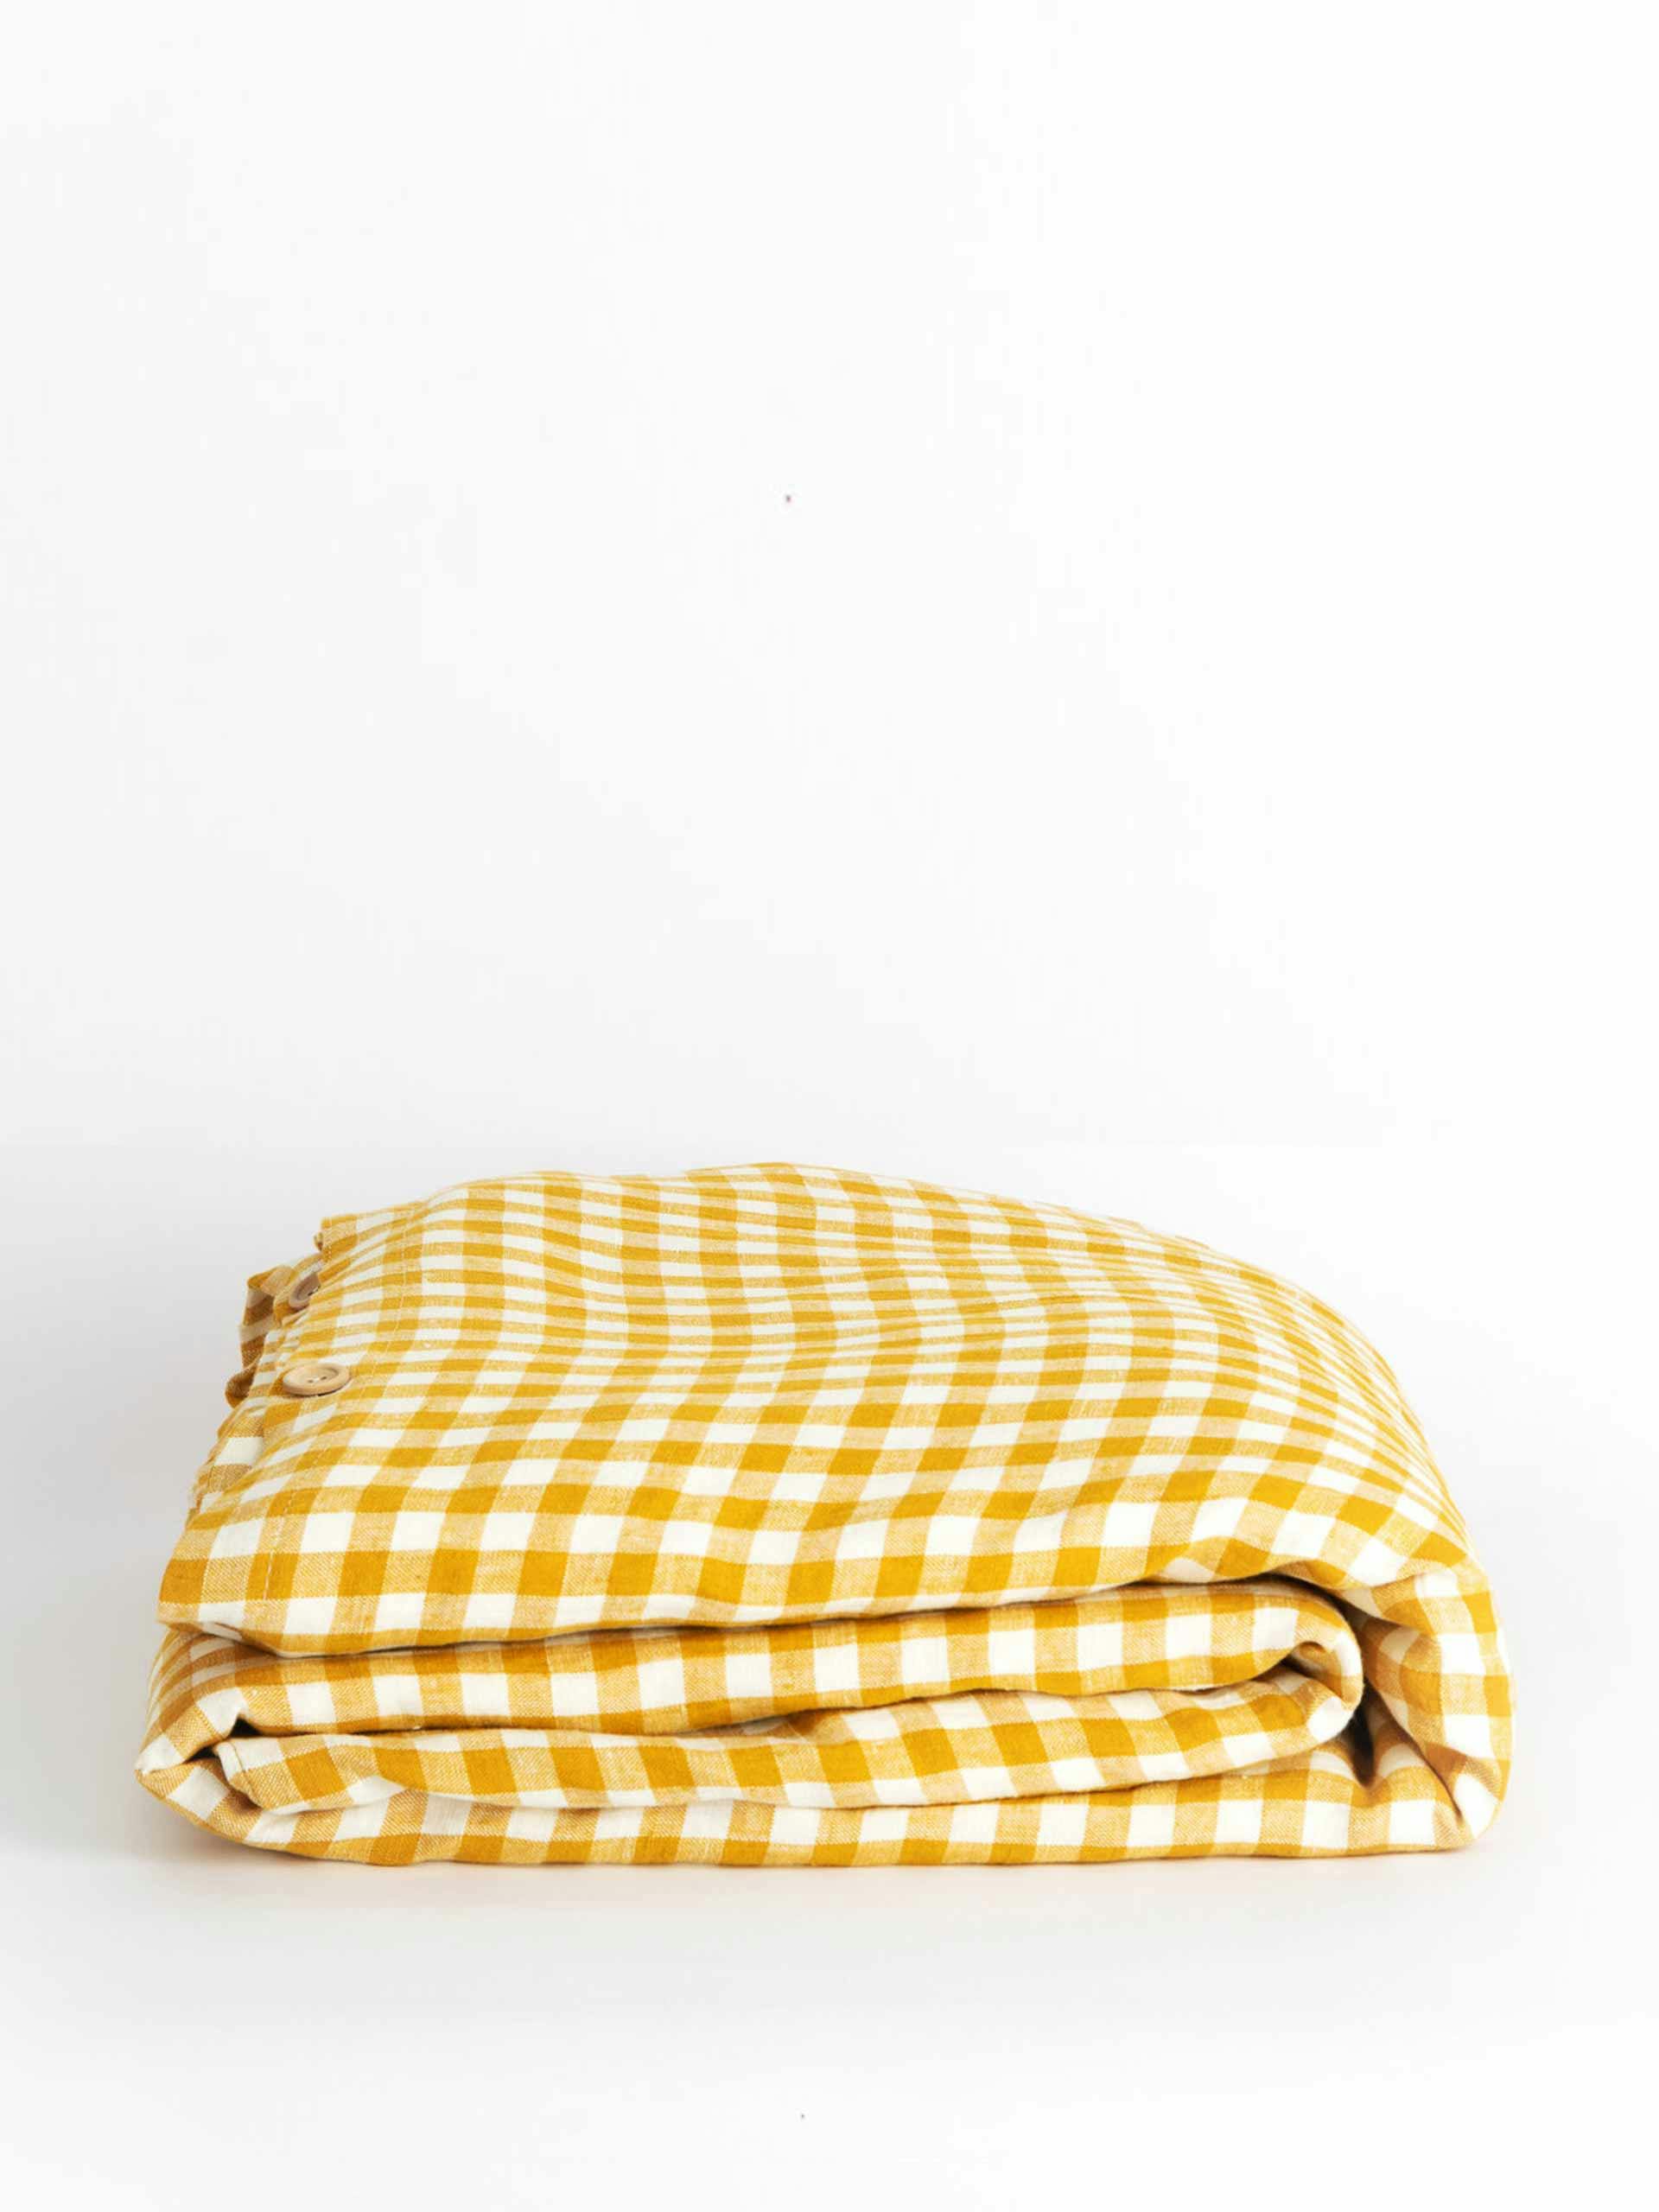 Yellow gingham linen bedding set